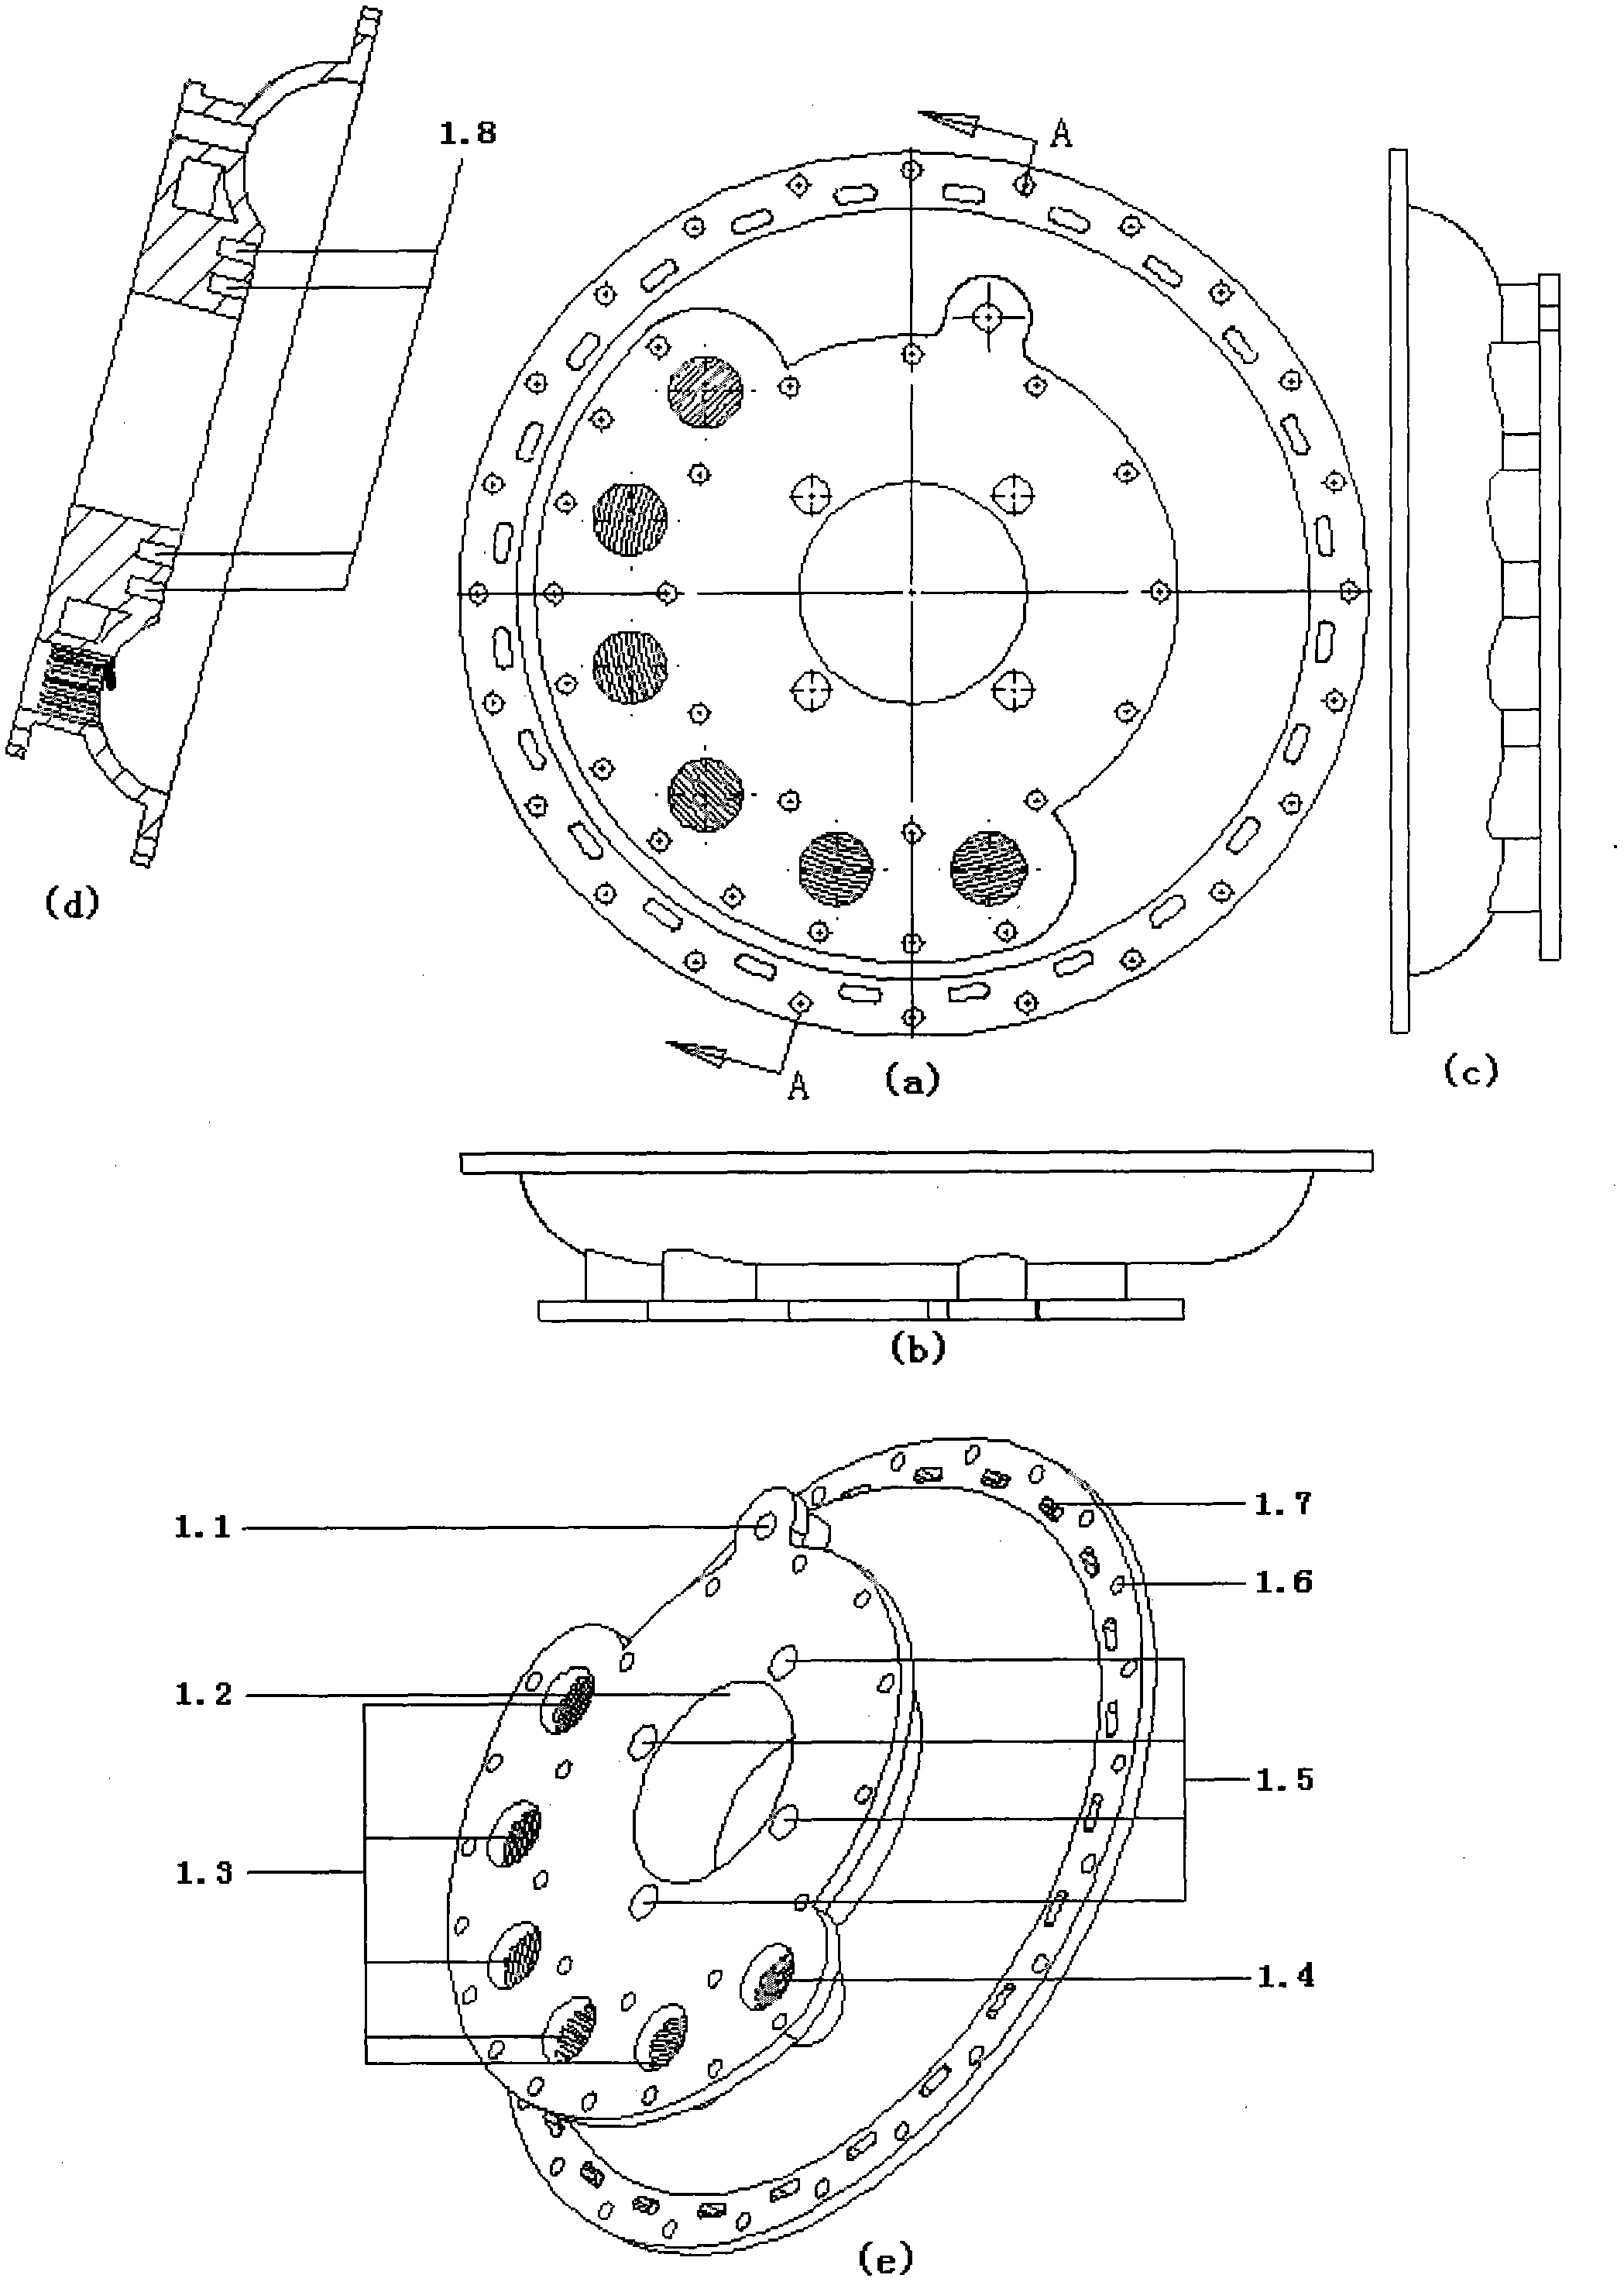 Double-rotor rotary piston engine